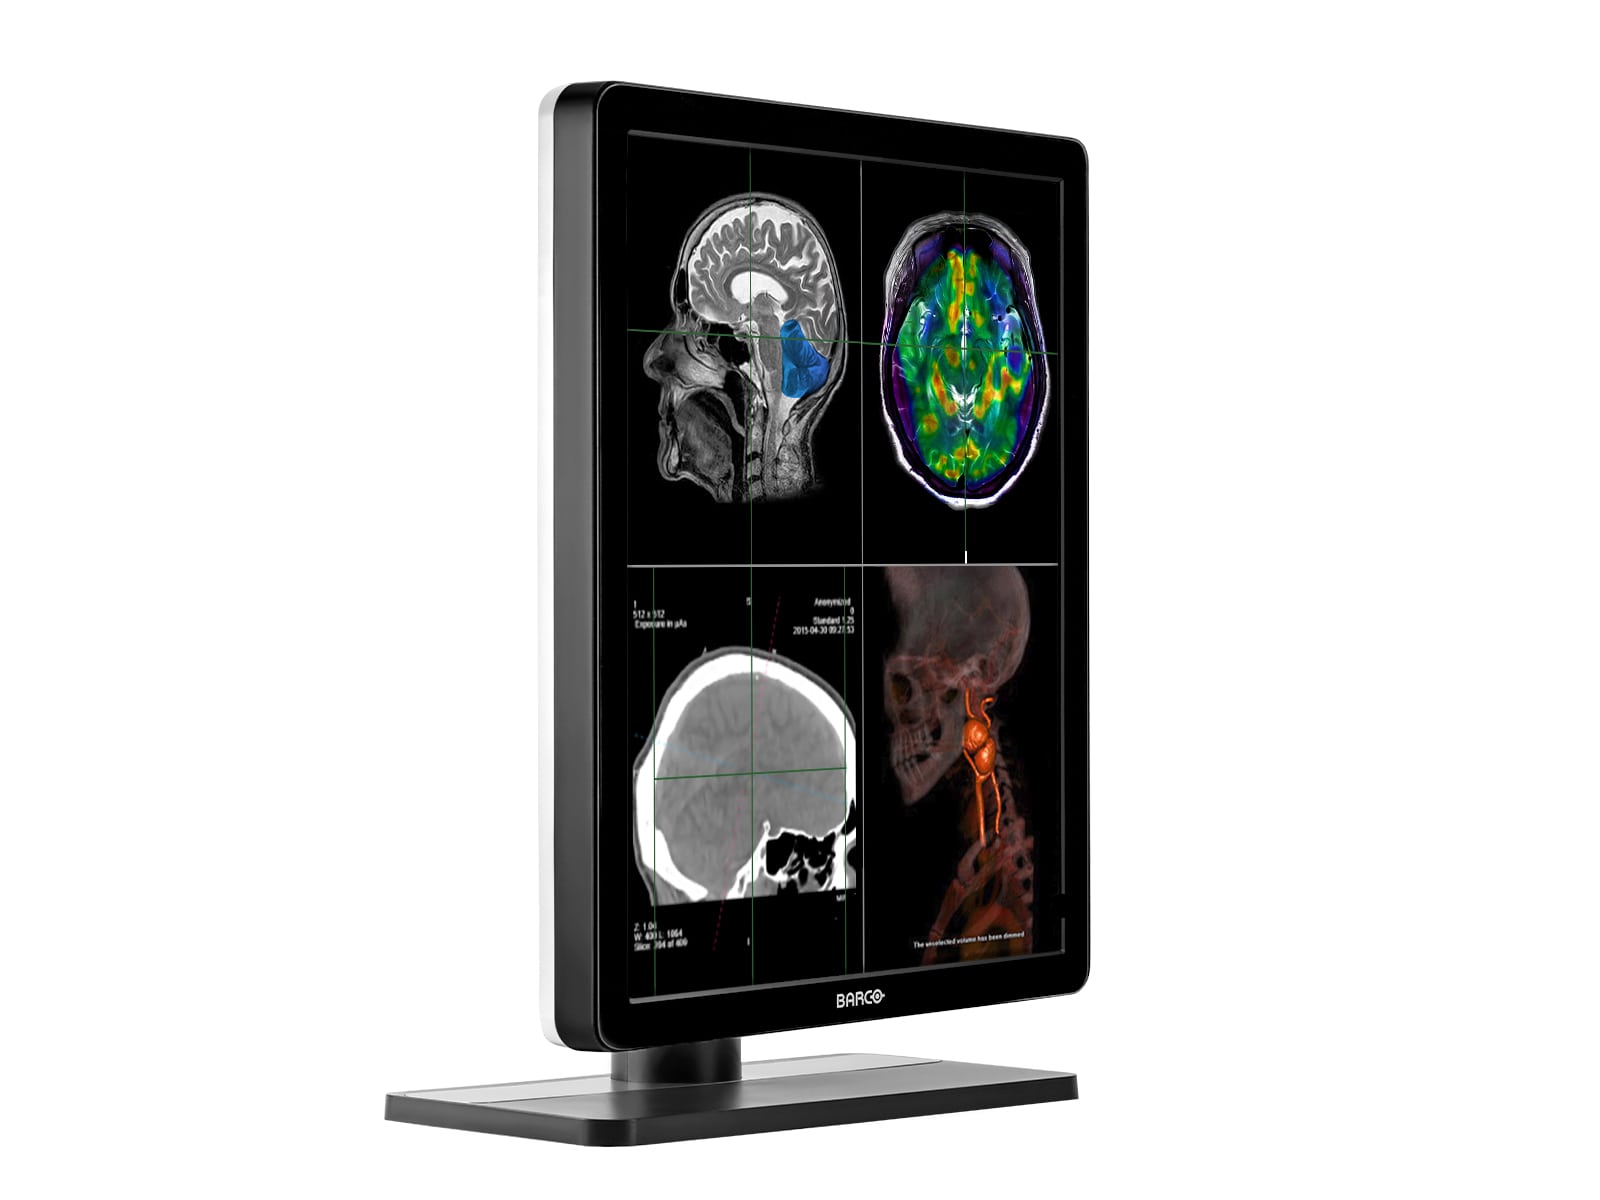 Barco Nio MDNC-2221 2MP 21" Color LED Diagnostic Radiology Display Monitor (K9301648B) Monitors.com 